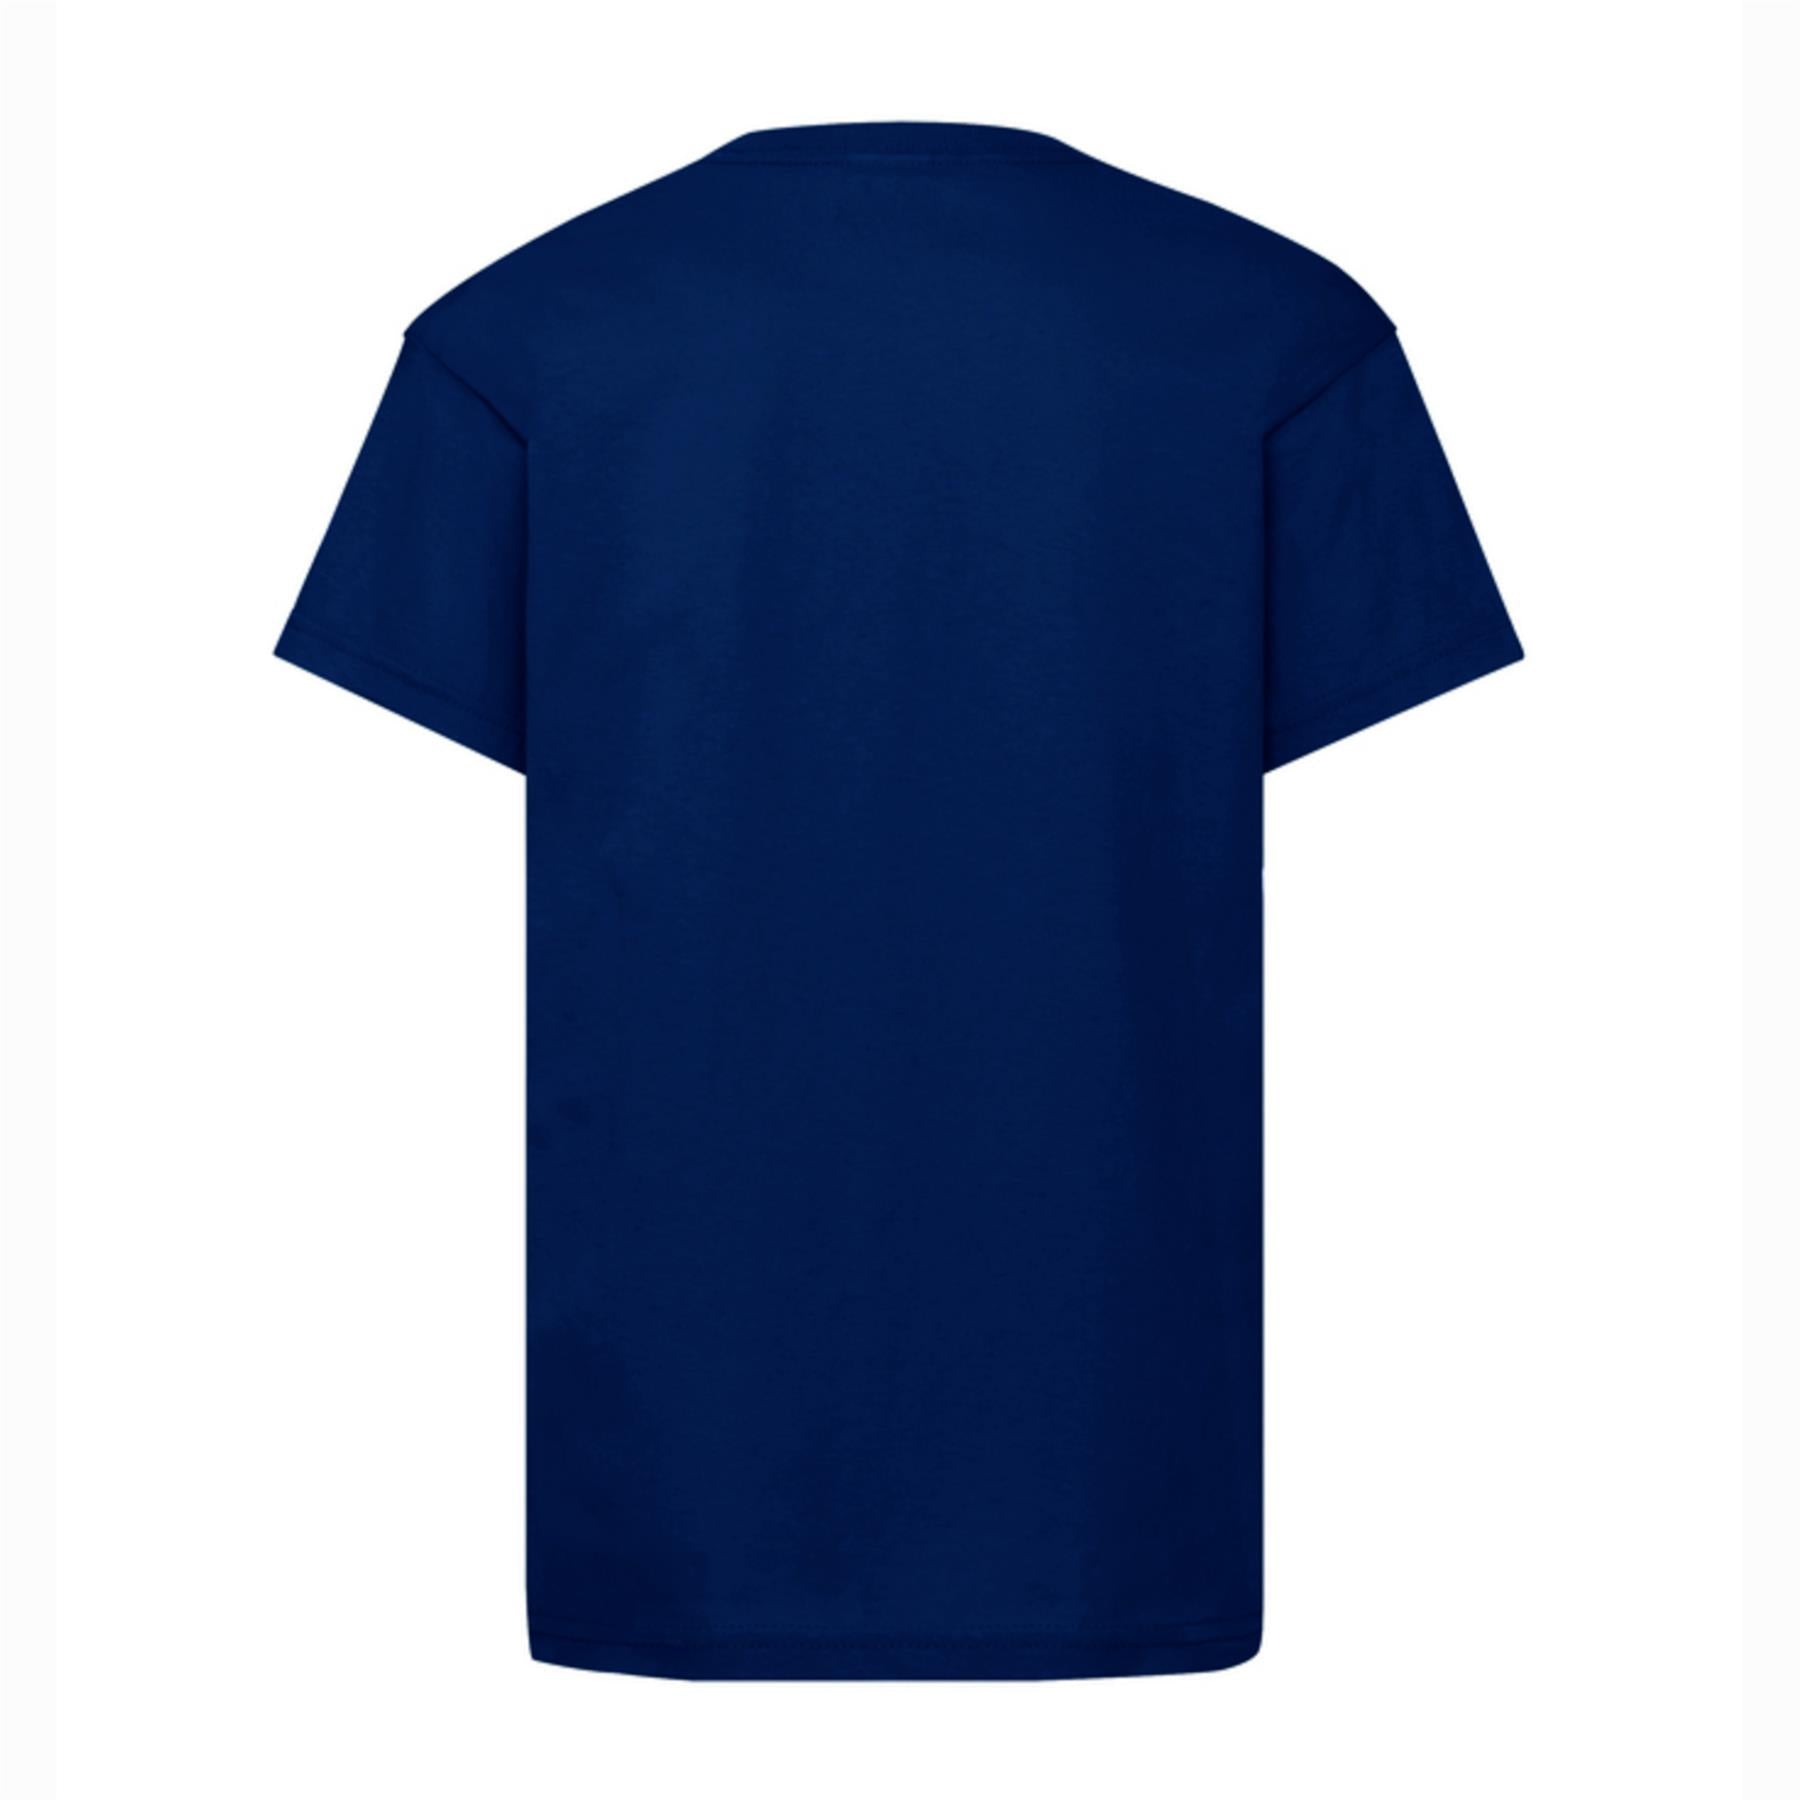 Unisex Green Short Sleeve Plain T-Shirt